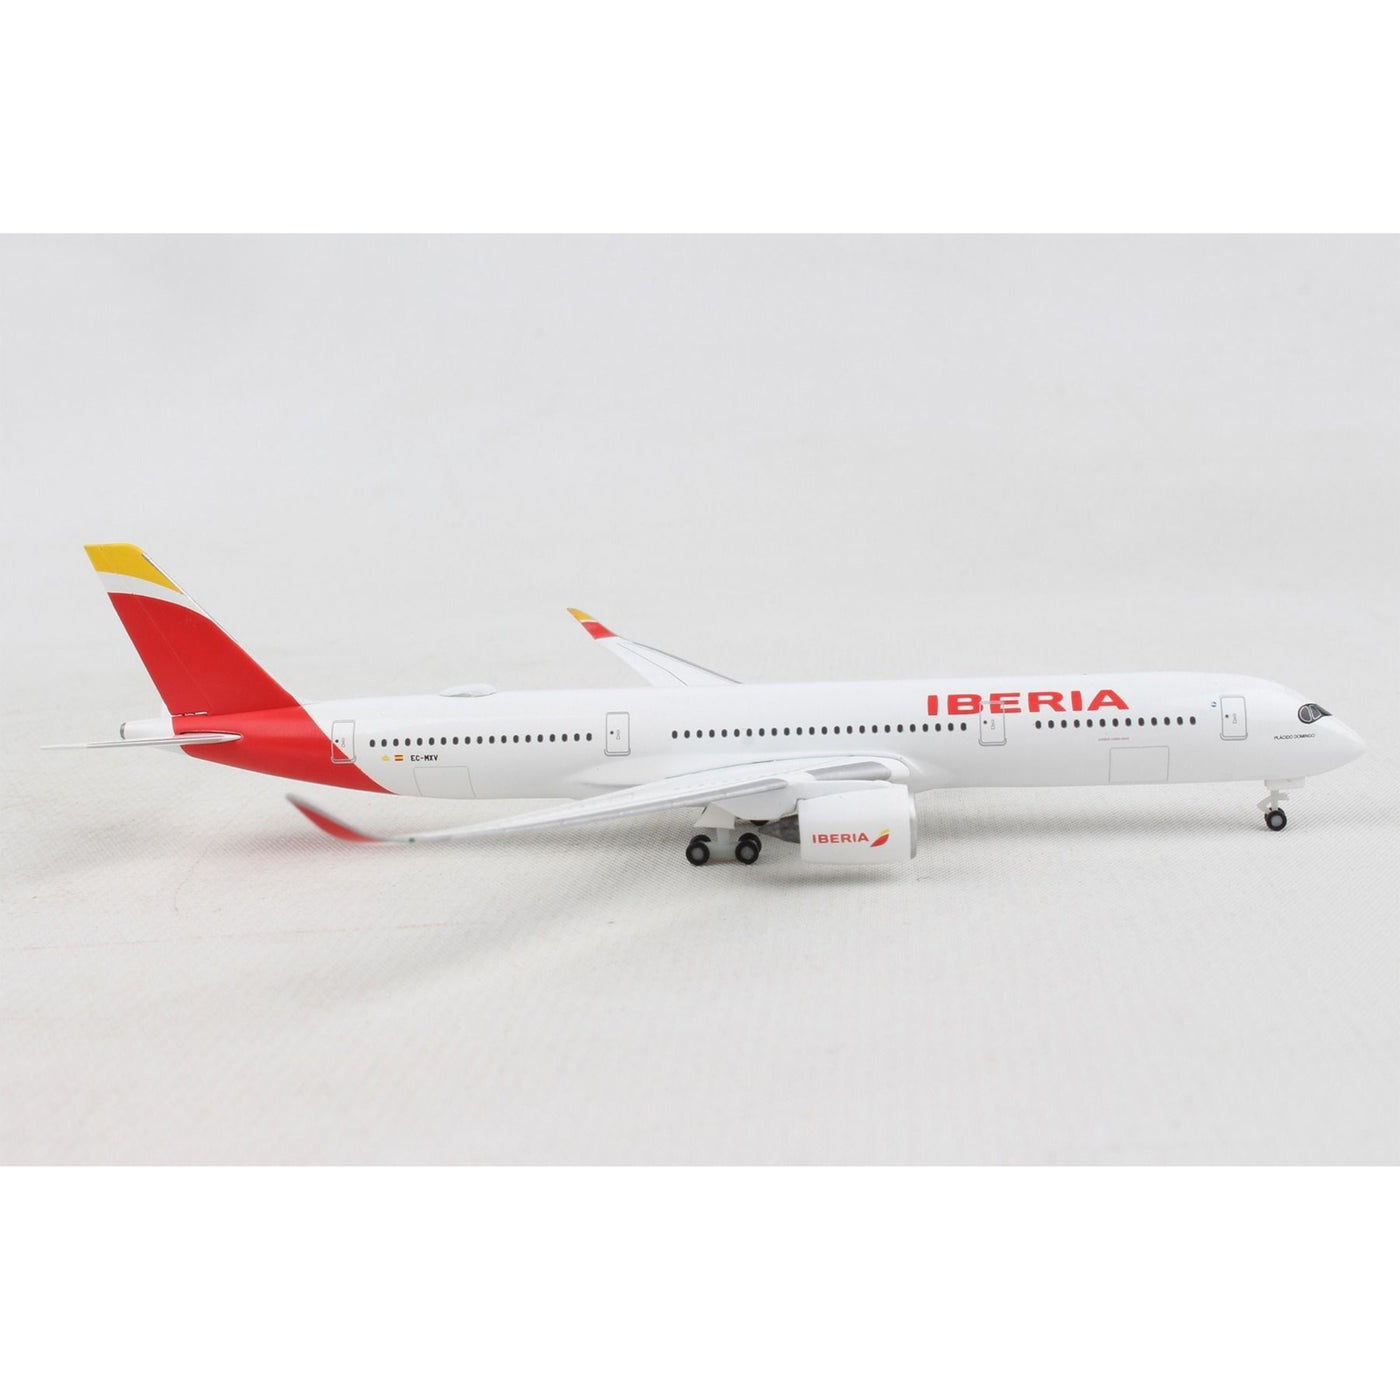 Herpa - 1/500 Iberia A350-900 EC-MXV